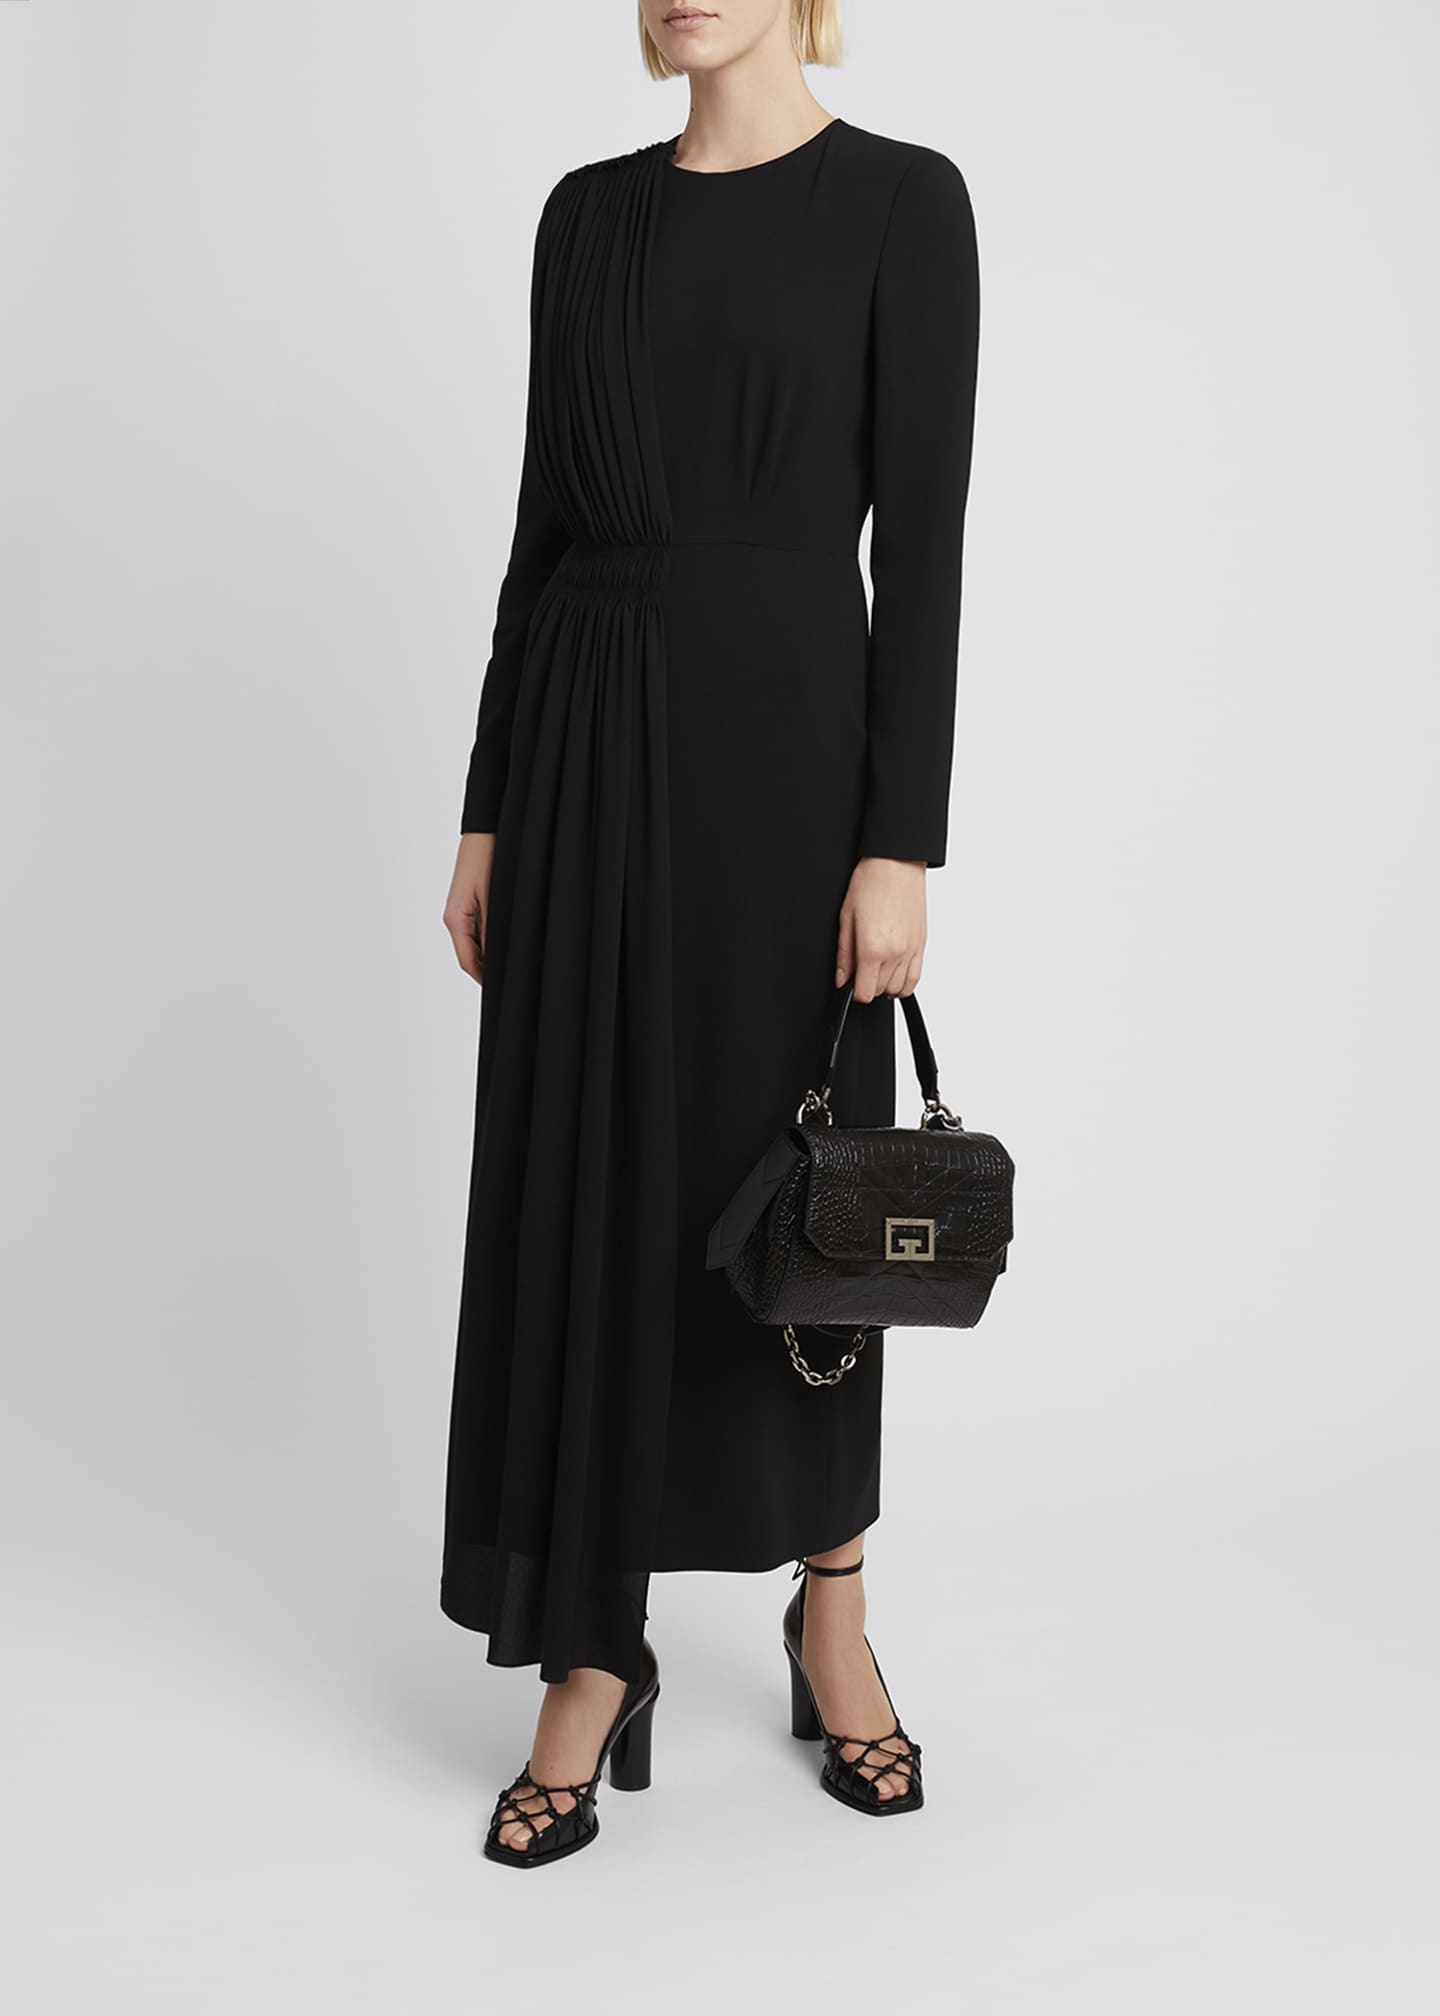 Givenchy Pleated Panel Asymmetric Midi Dress - Bergdorf Goodman